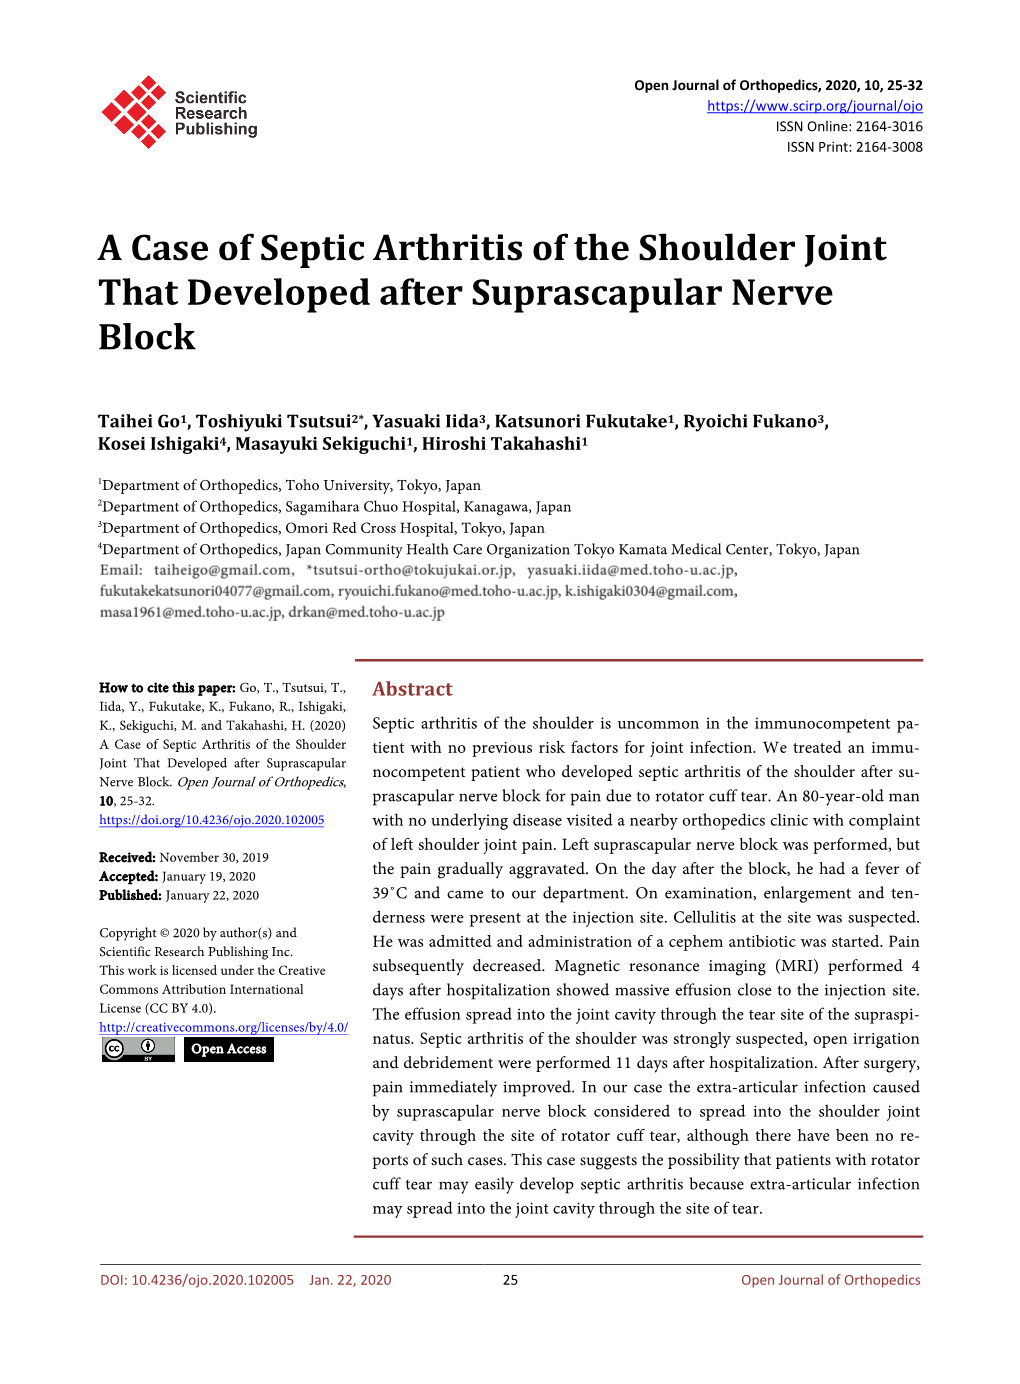 A Case of Septic Arthritis of the Shoulder Joint That Developed After Suprascapular Nerve Block